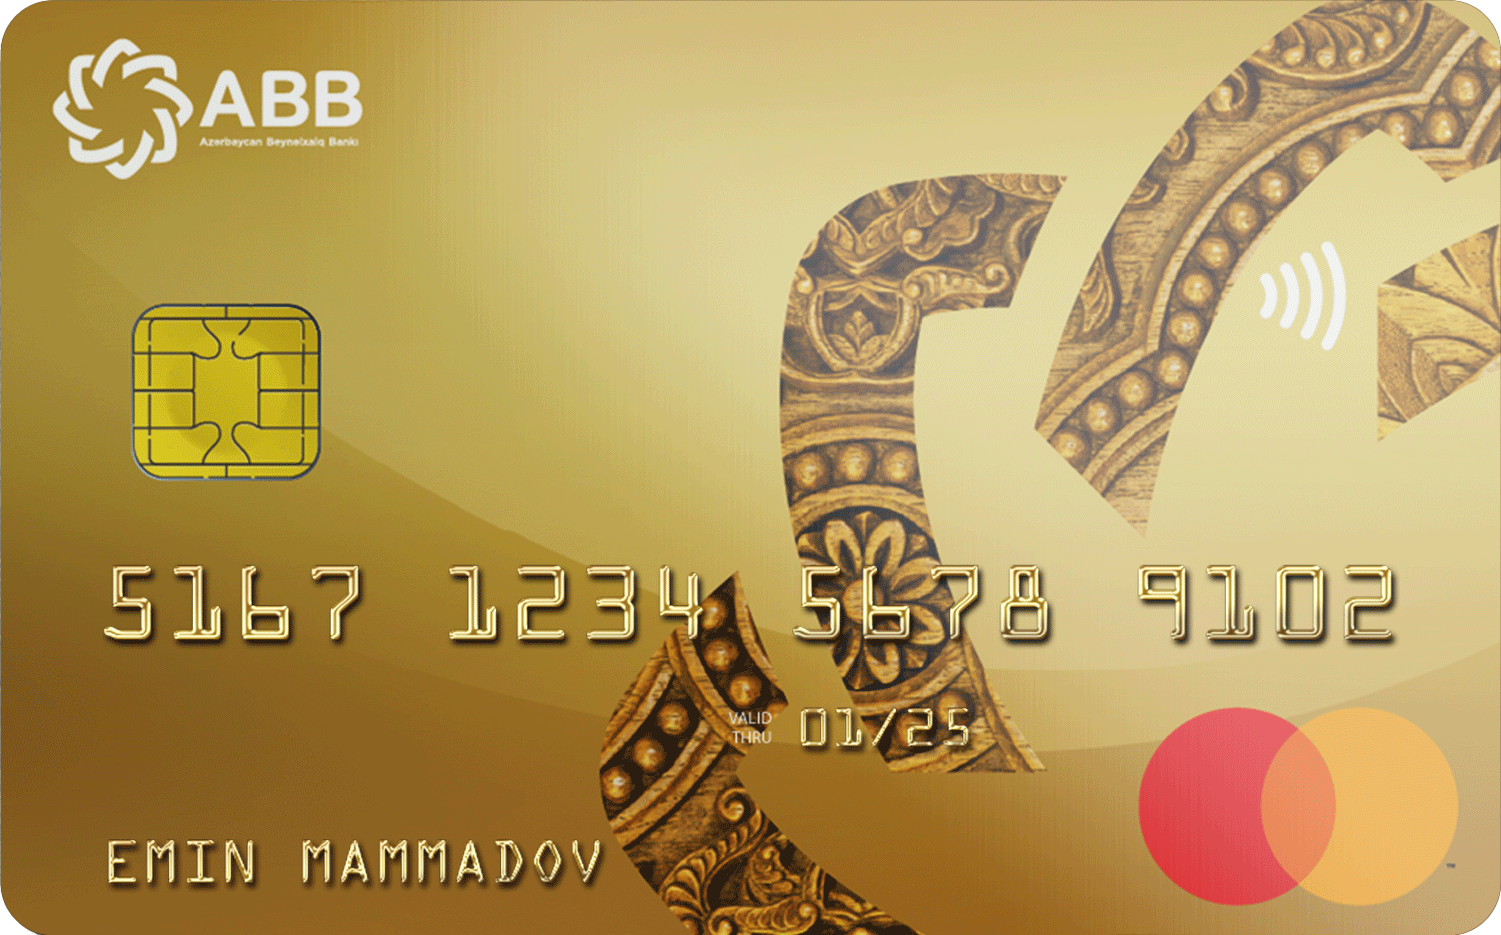 MasterCard Gold PayPass